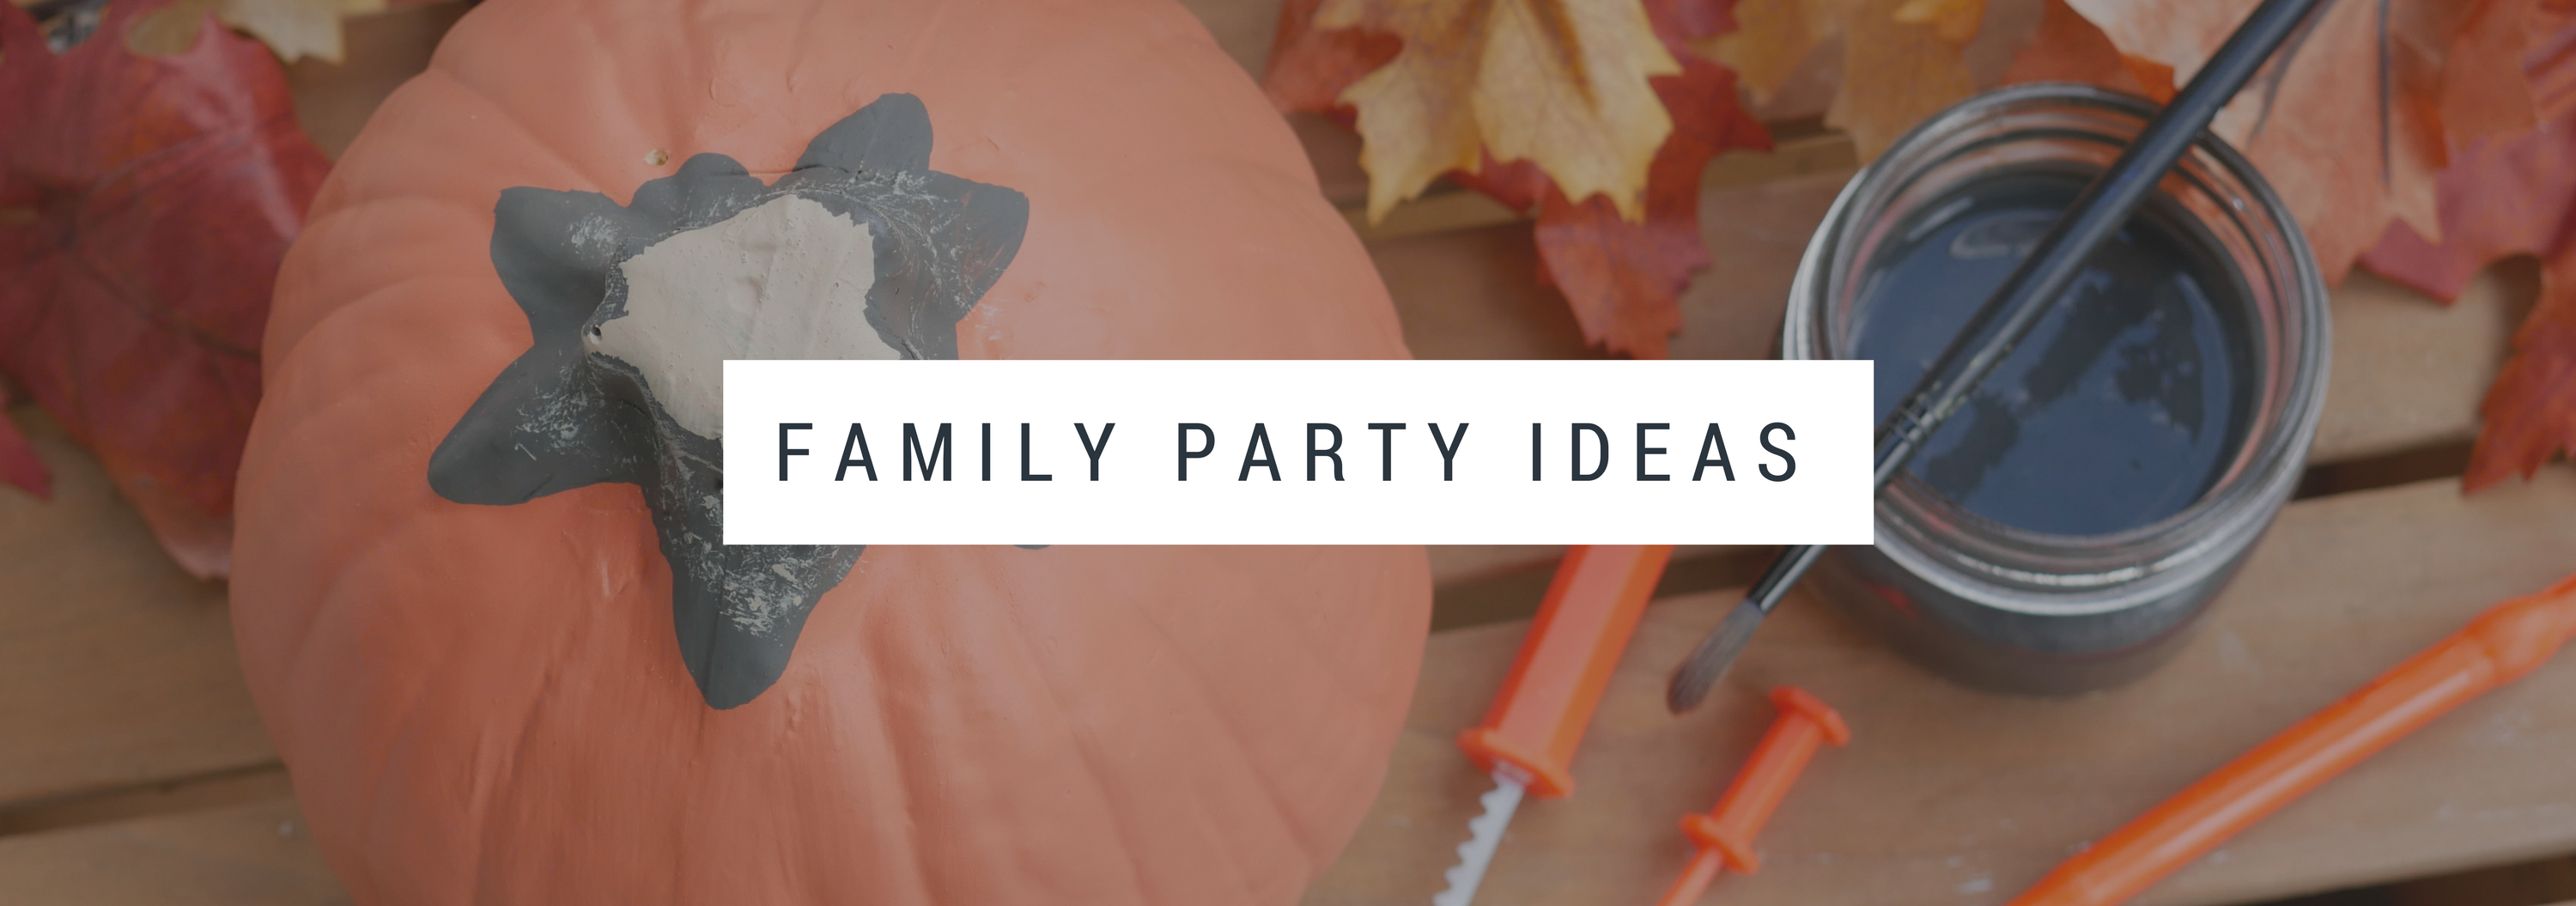 pumpkin church ministry idea Family Party Idea 2.png